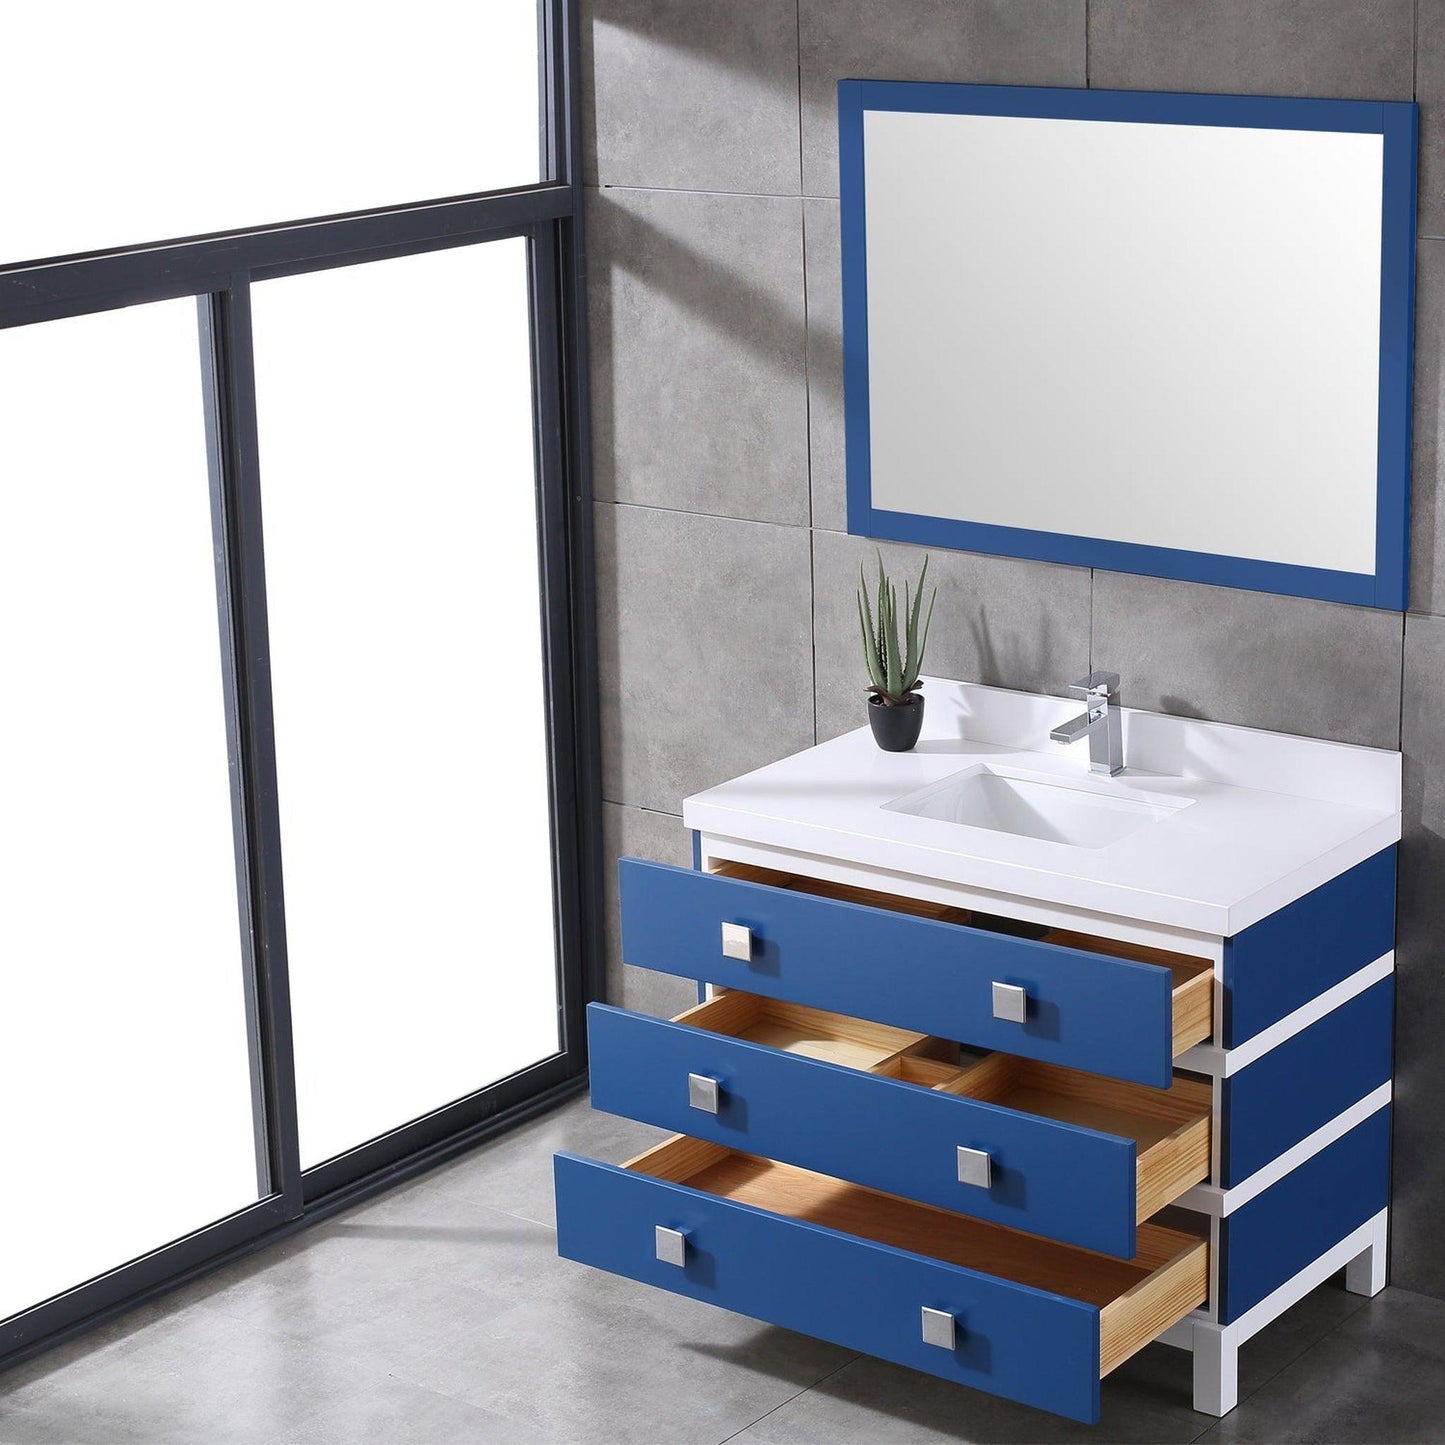 Eviva Sydney 42" x 32" Blue and White Freestanding Bathroom Vanity With White Solid Quartz Countertop